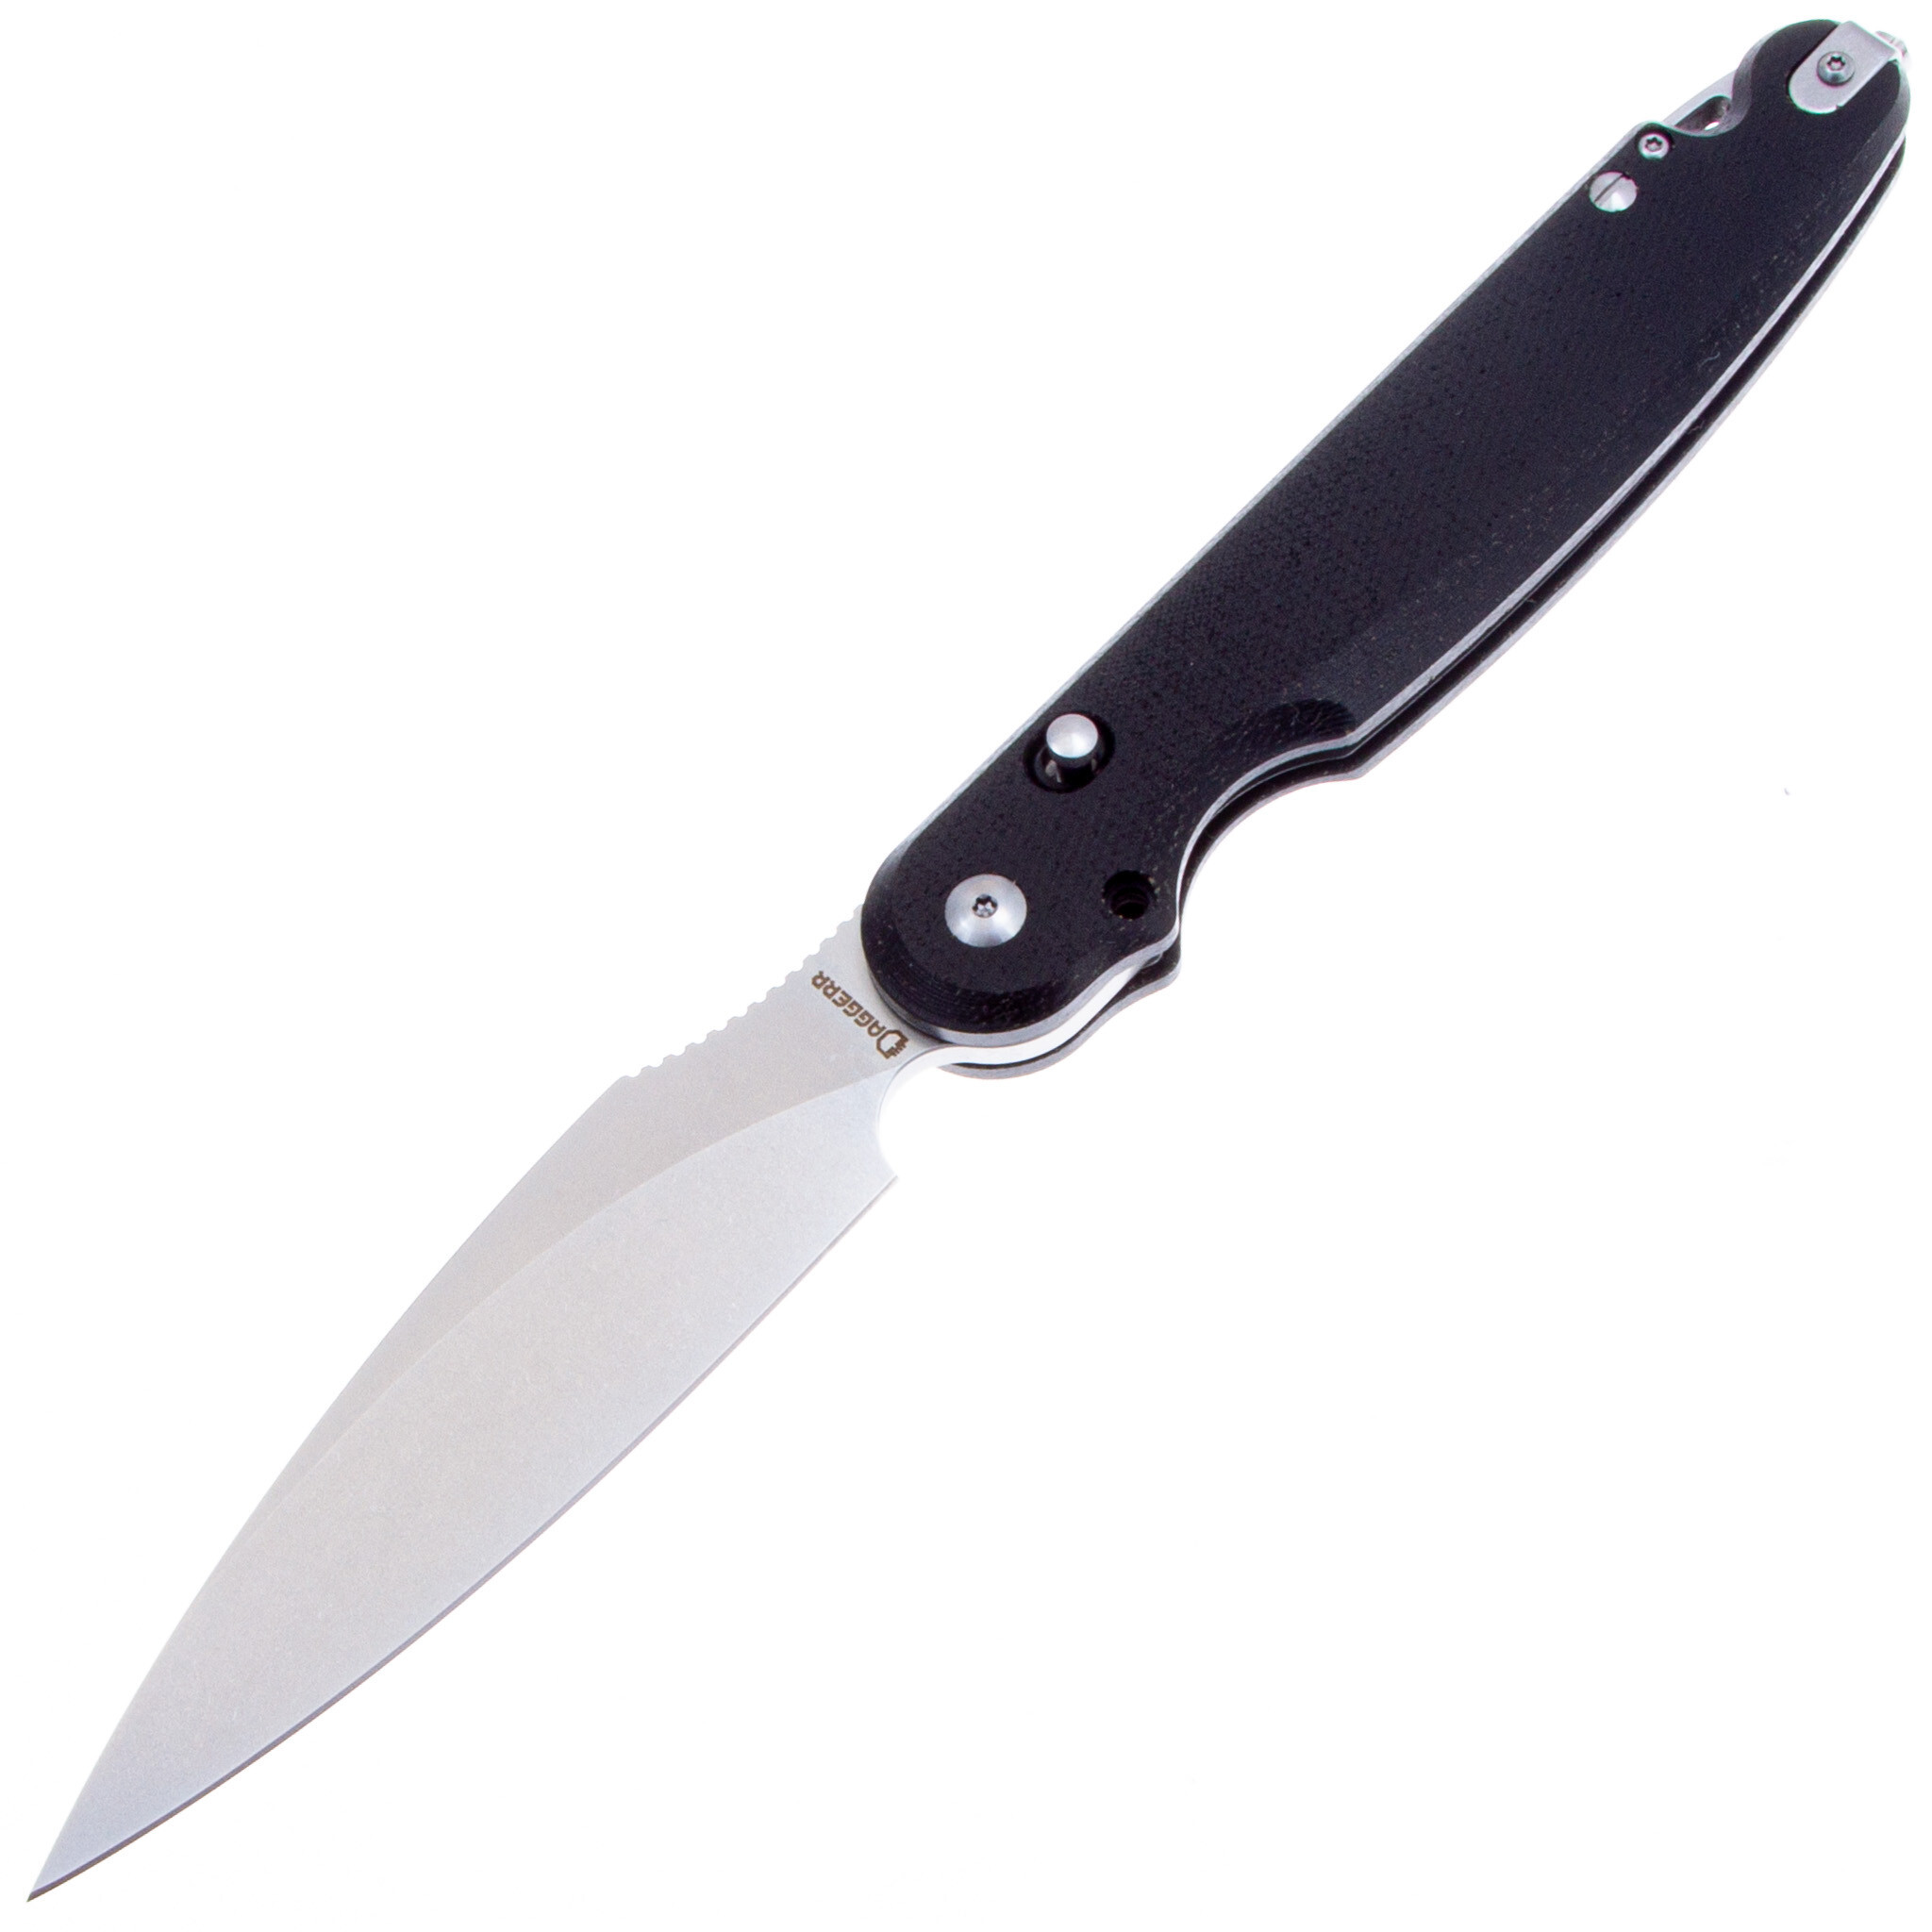 Складной нож Daggerr Parrot Black, сталь D2 - фото 1